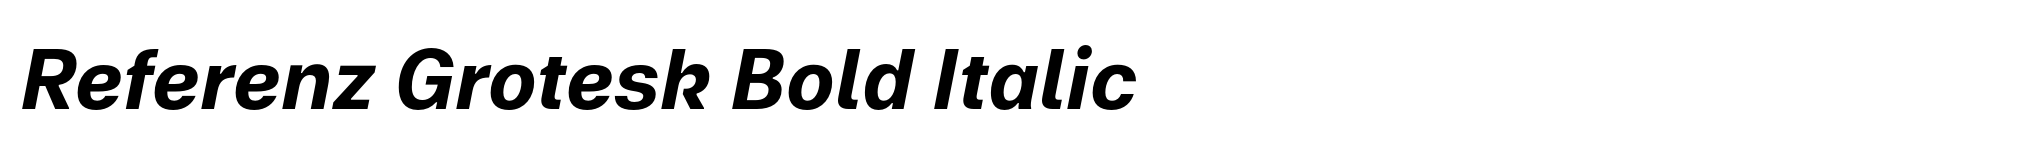 Referenz Grotesk Bold Italic image